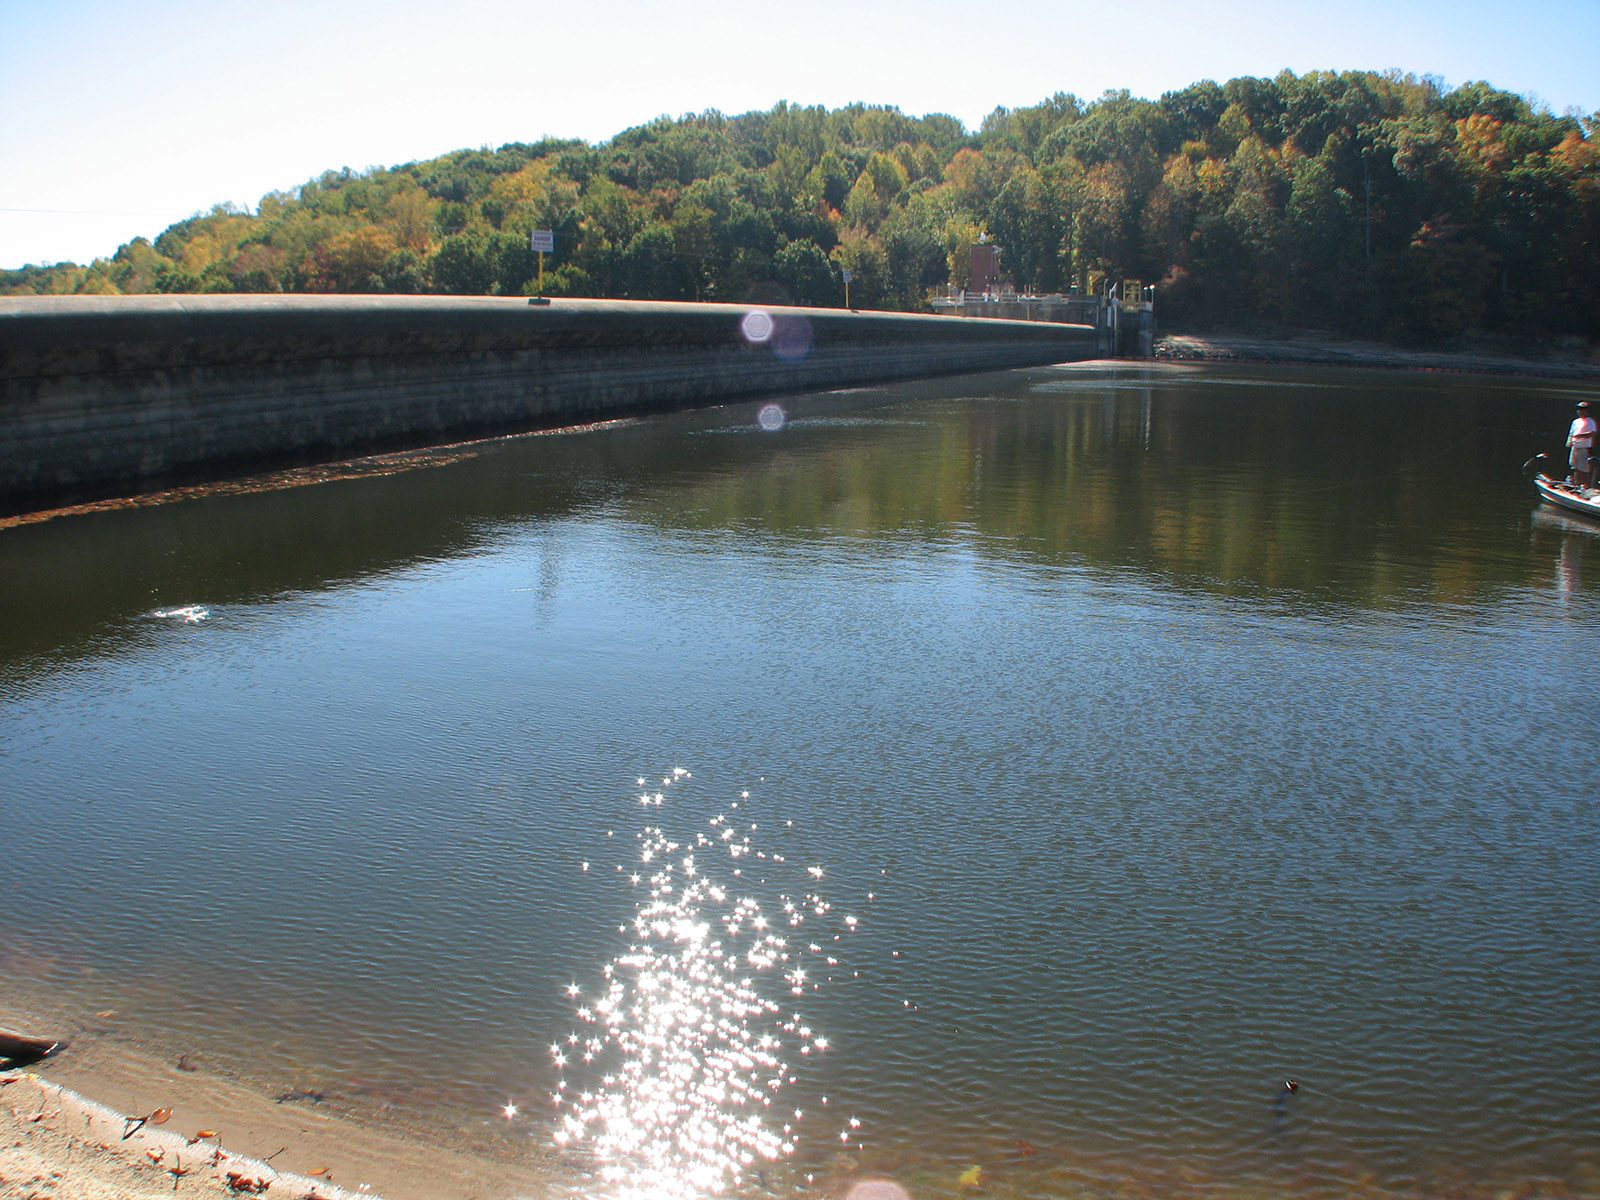 An image of a dam next to a lake